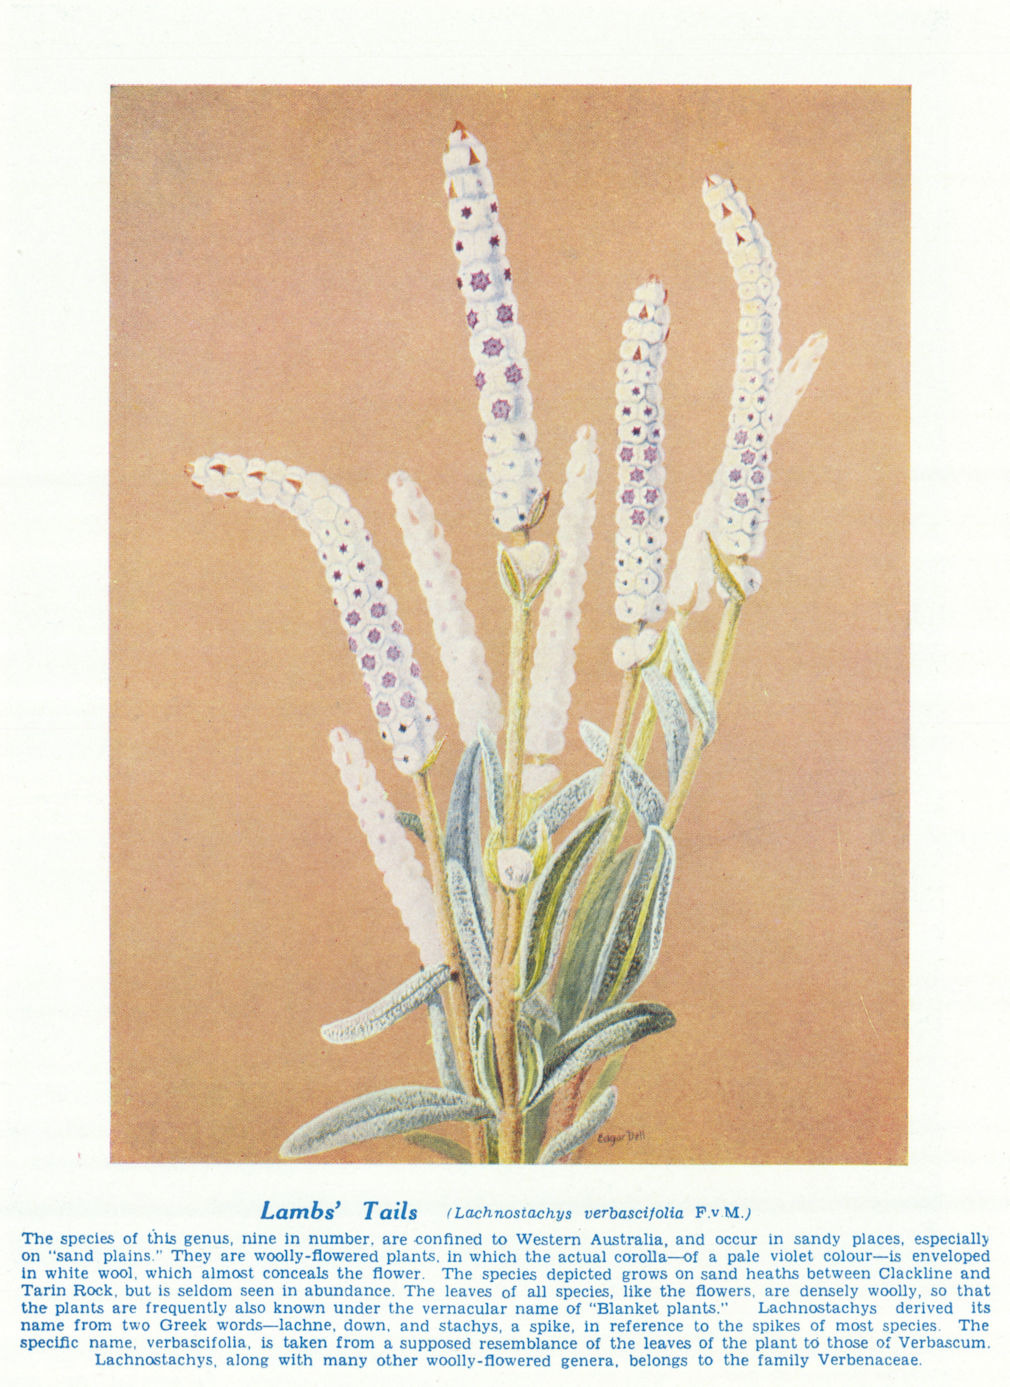 Lambs' TaiIs (Lachnostachys verbascifolia). West Australian Wild Flowers 1950